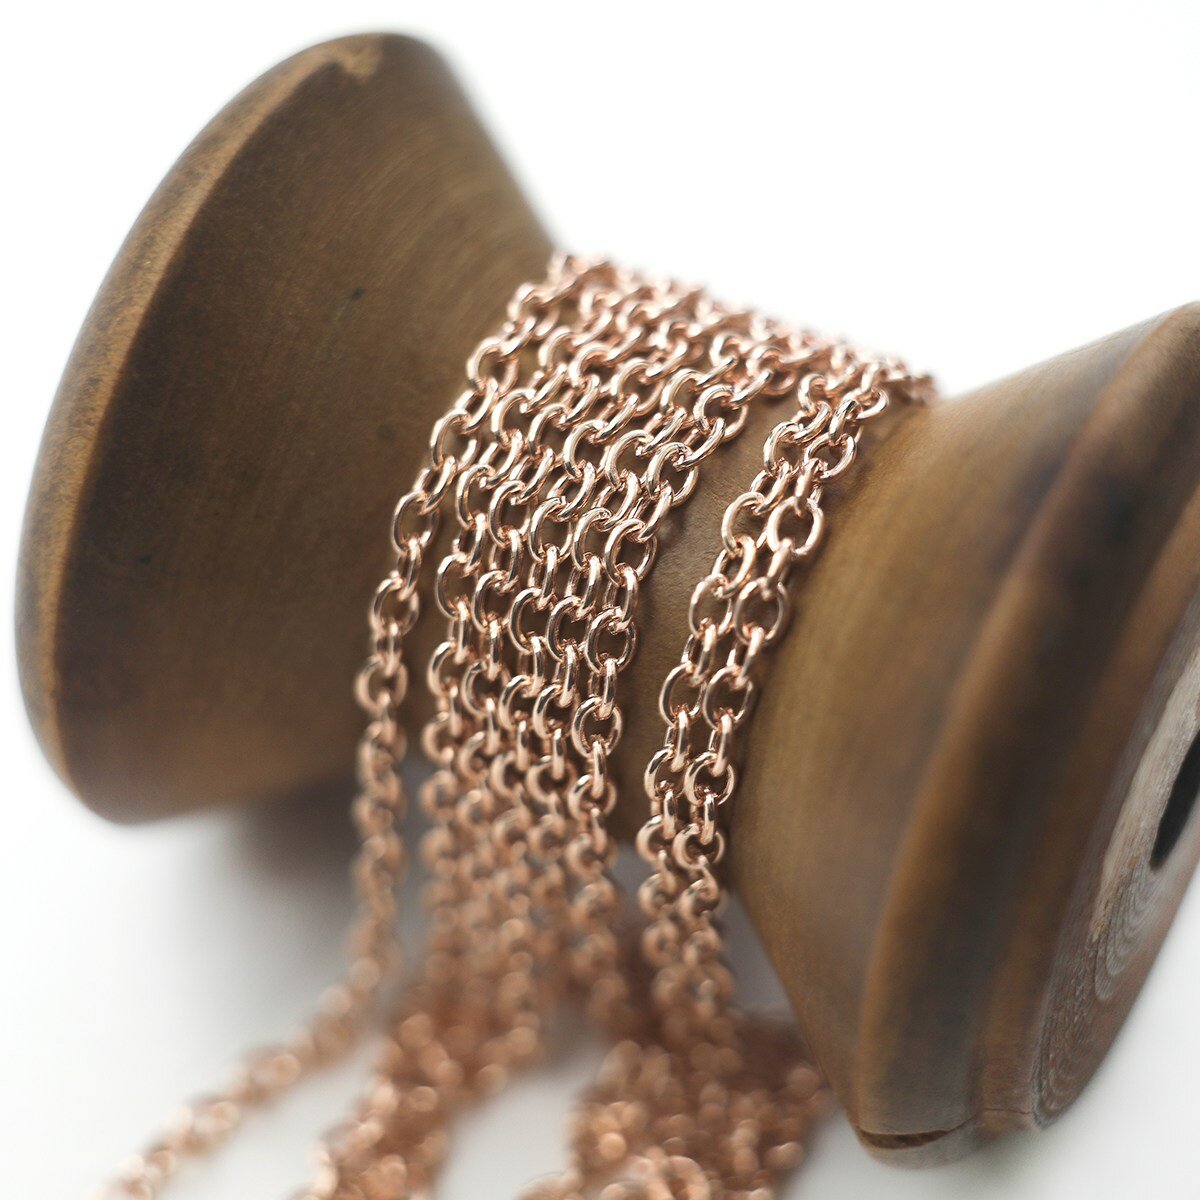 Цепь декоративная для бижутерии 6 м / цепочка для рукоделия /фурнитура для украшений сталь цвет розовое золото 3x2x0.5 мм